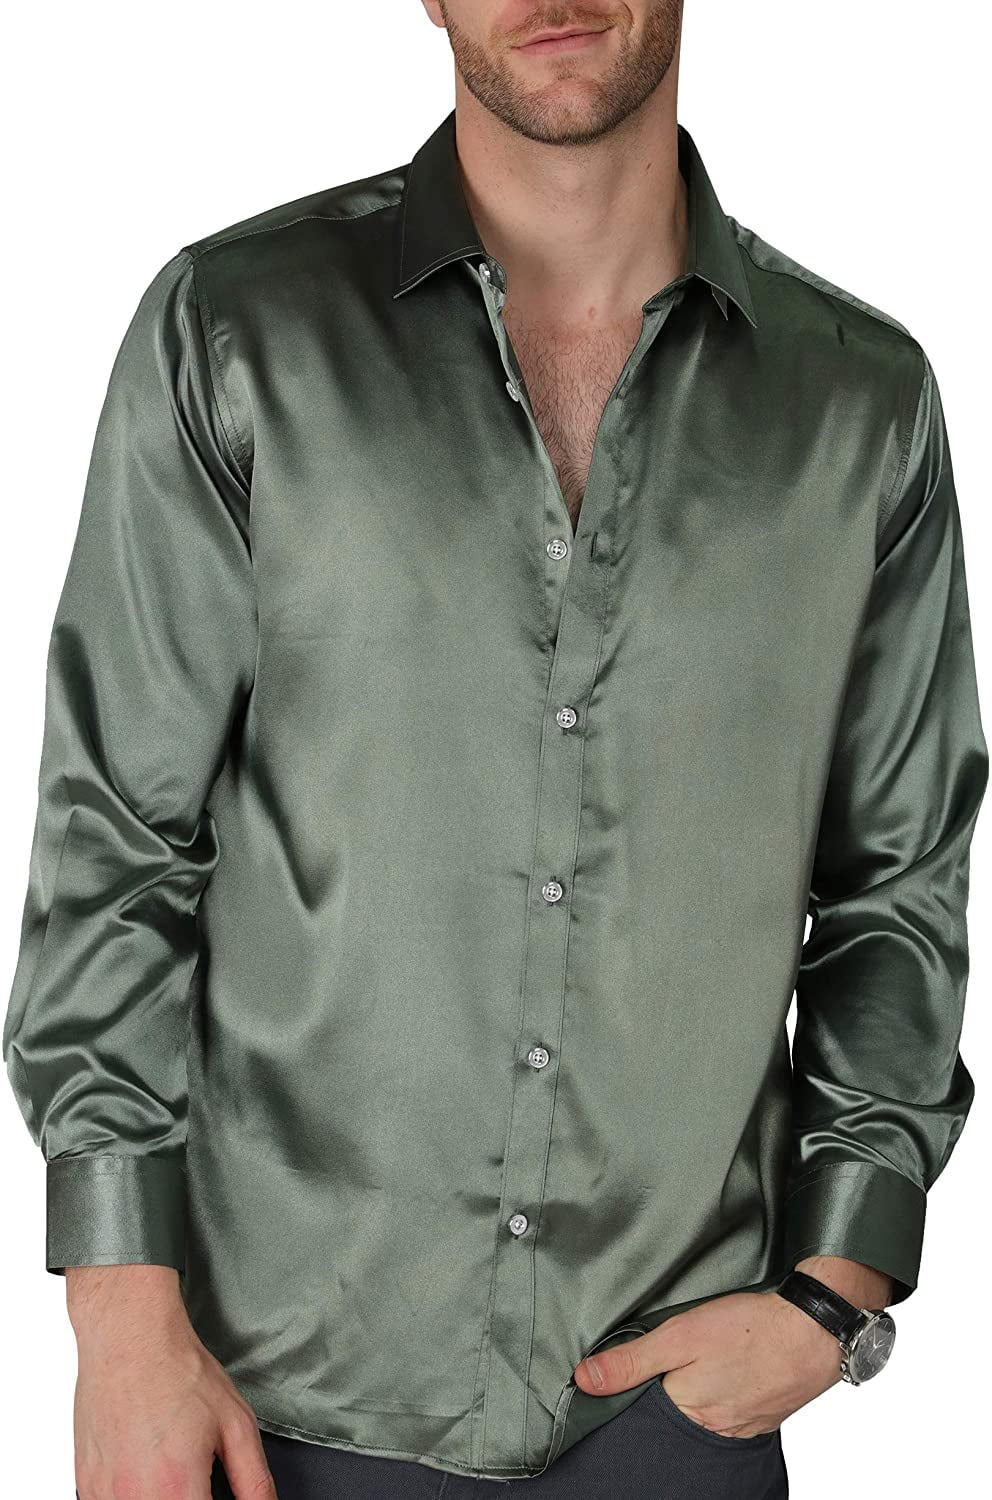 Men's Premium Wrinkle Resistant Long Sleeve Button Down Sateen Dress Shirt 